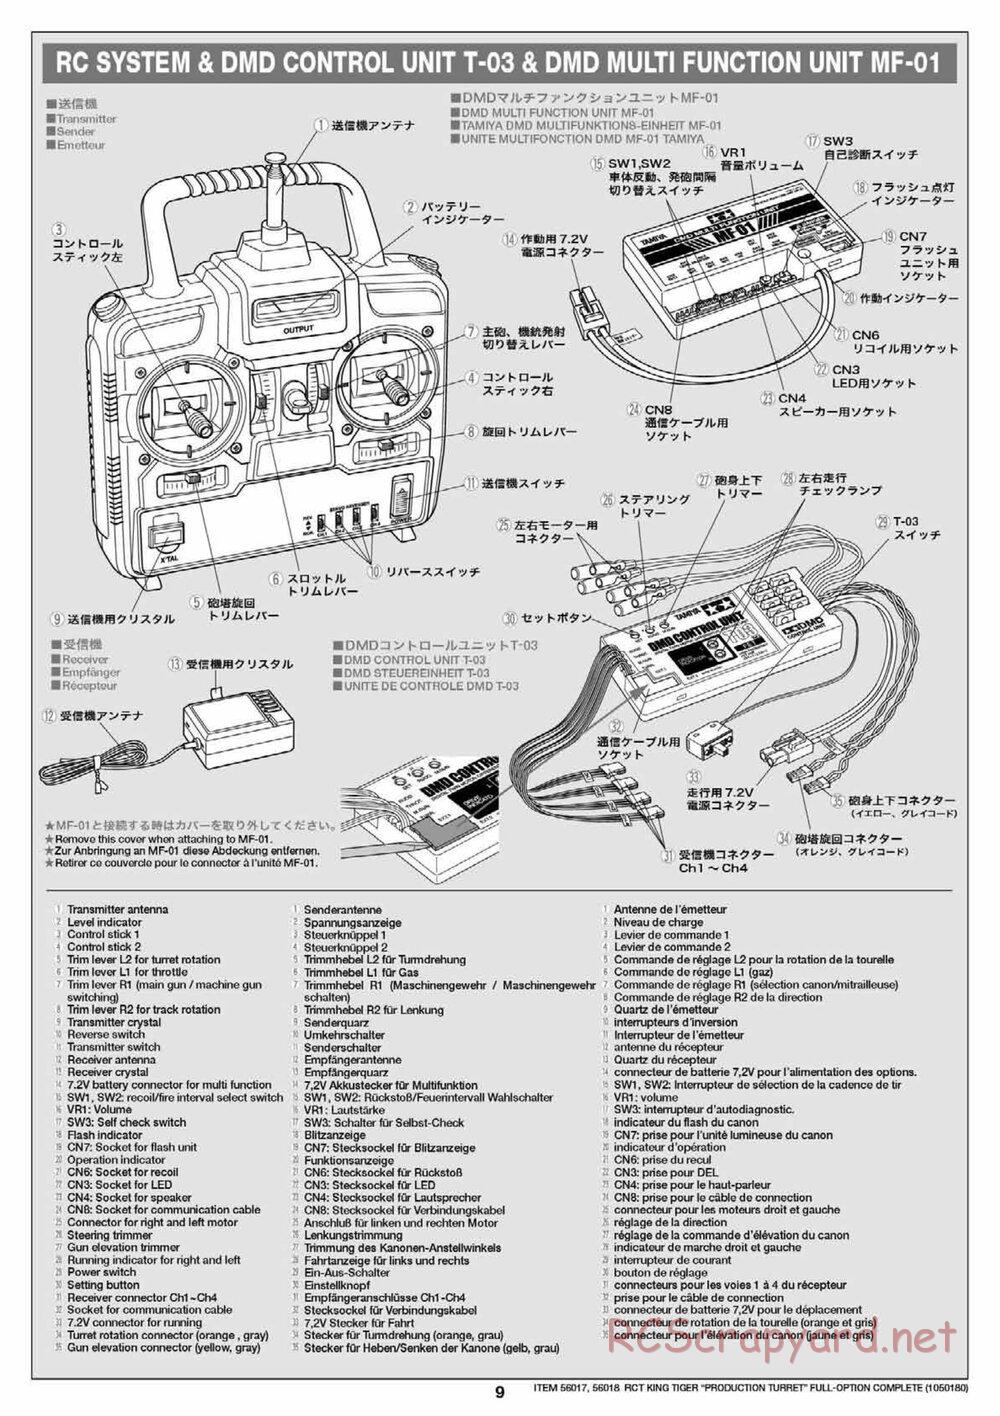 Tamiya - King Tiger - 1/16 Scale Chassis - Manual - Page 9